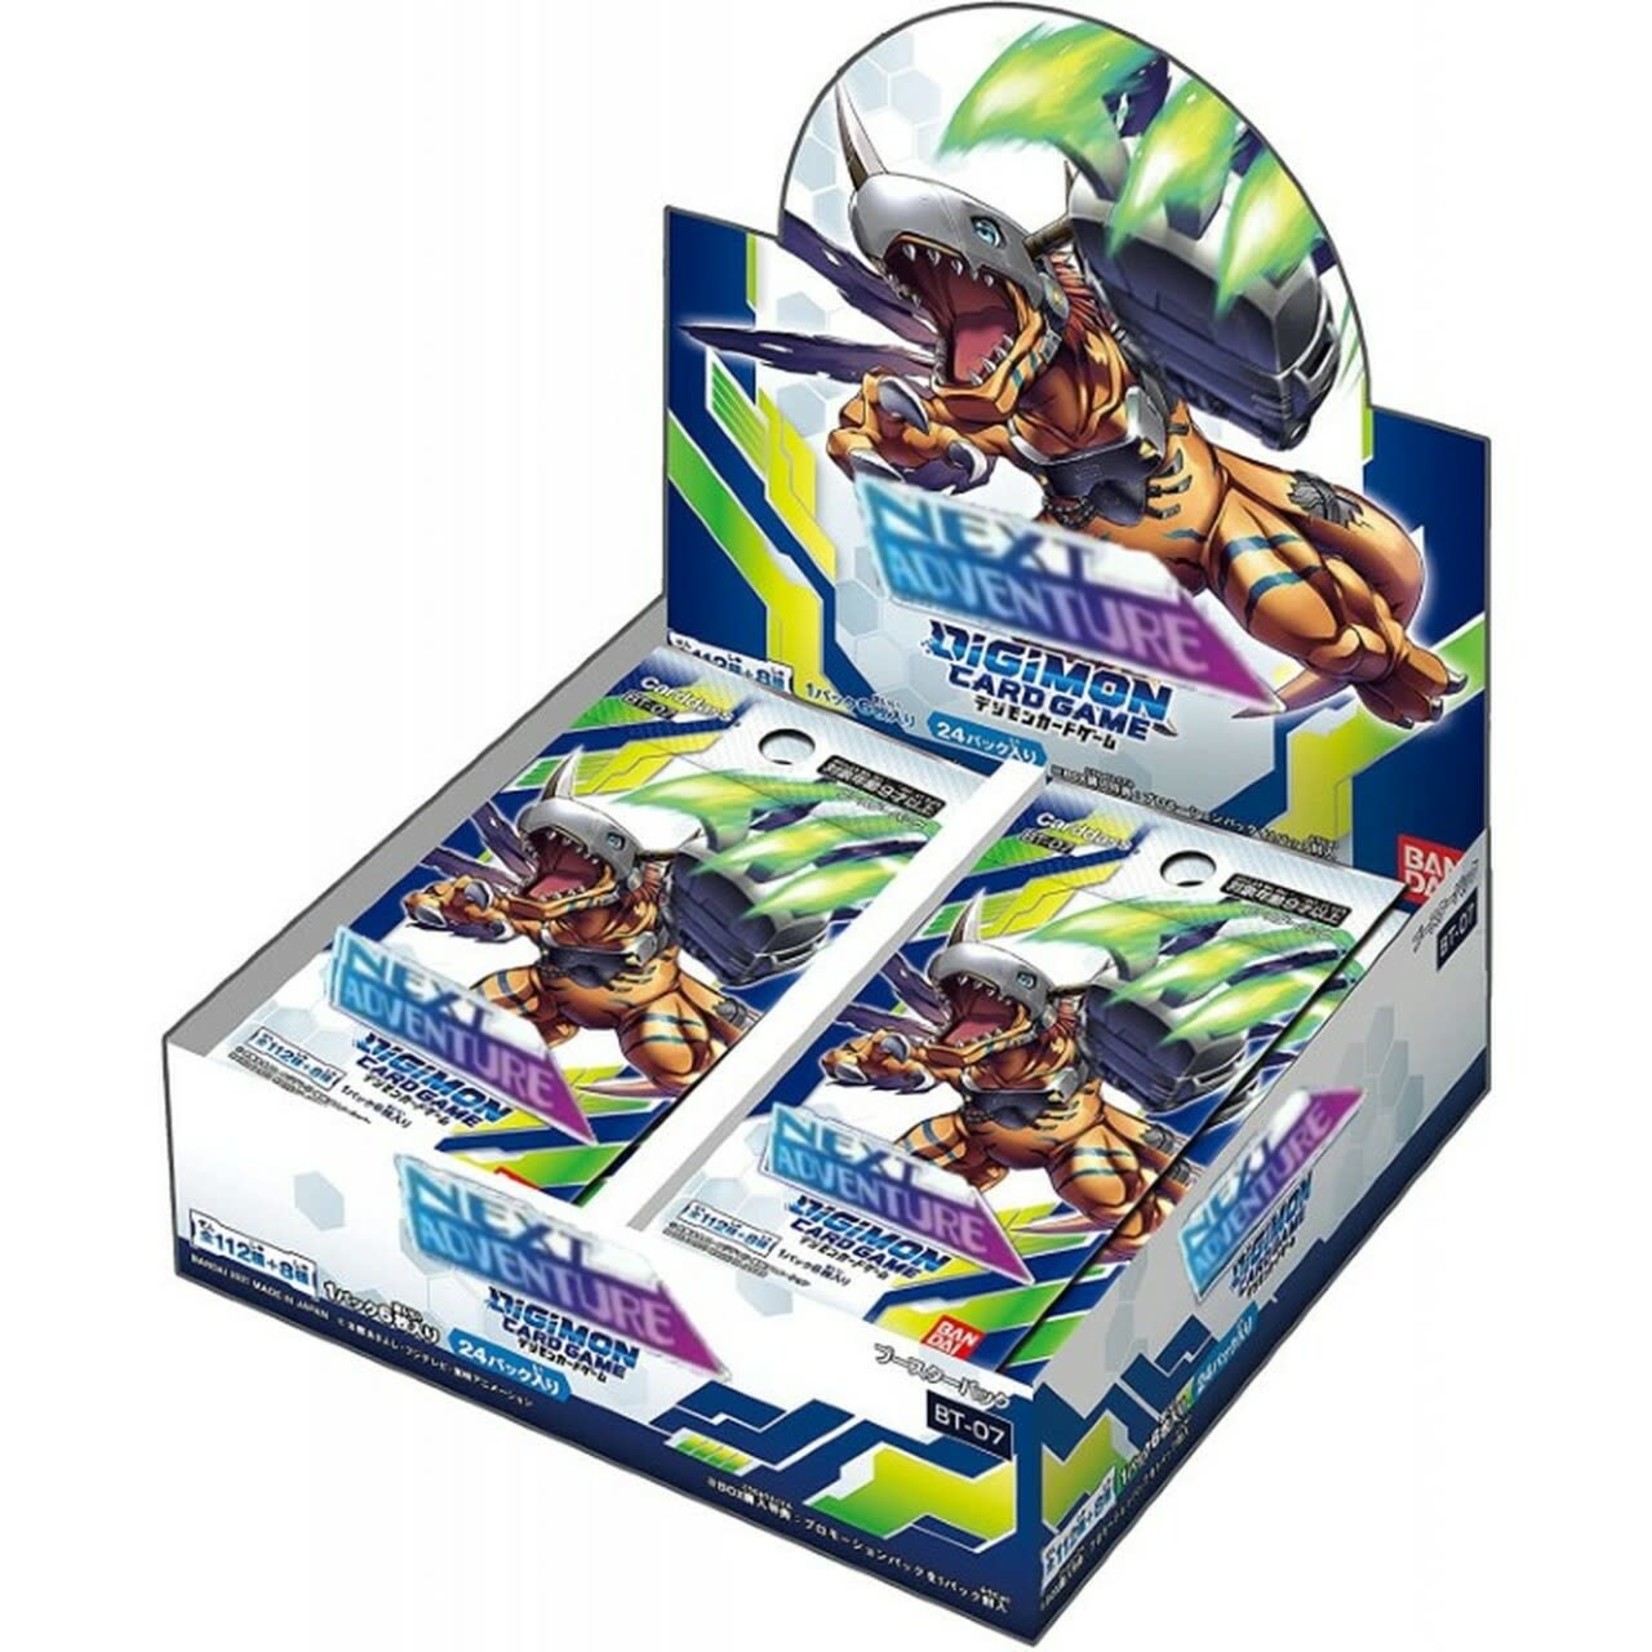 Bandai Digimon Trading Card Game: Next Adventure Booster Box